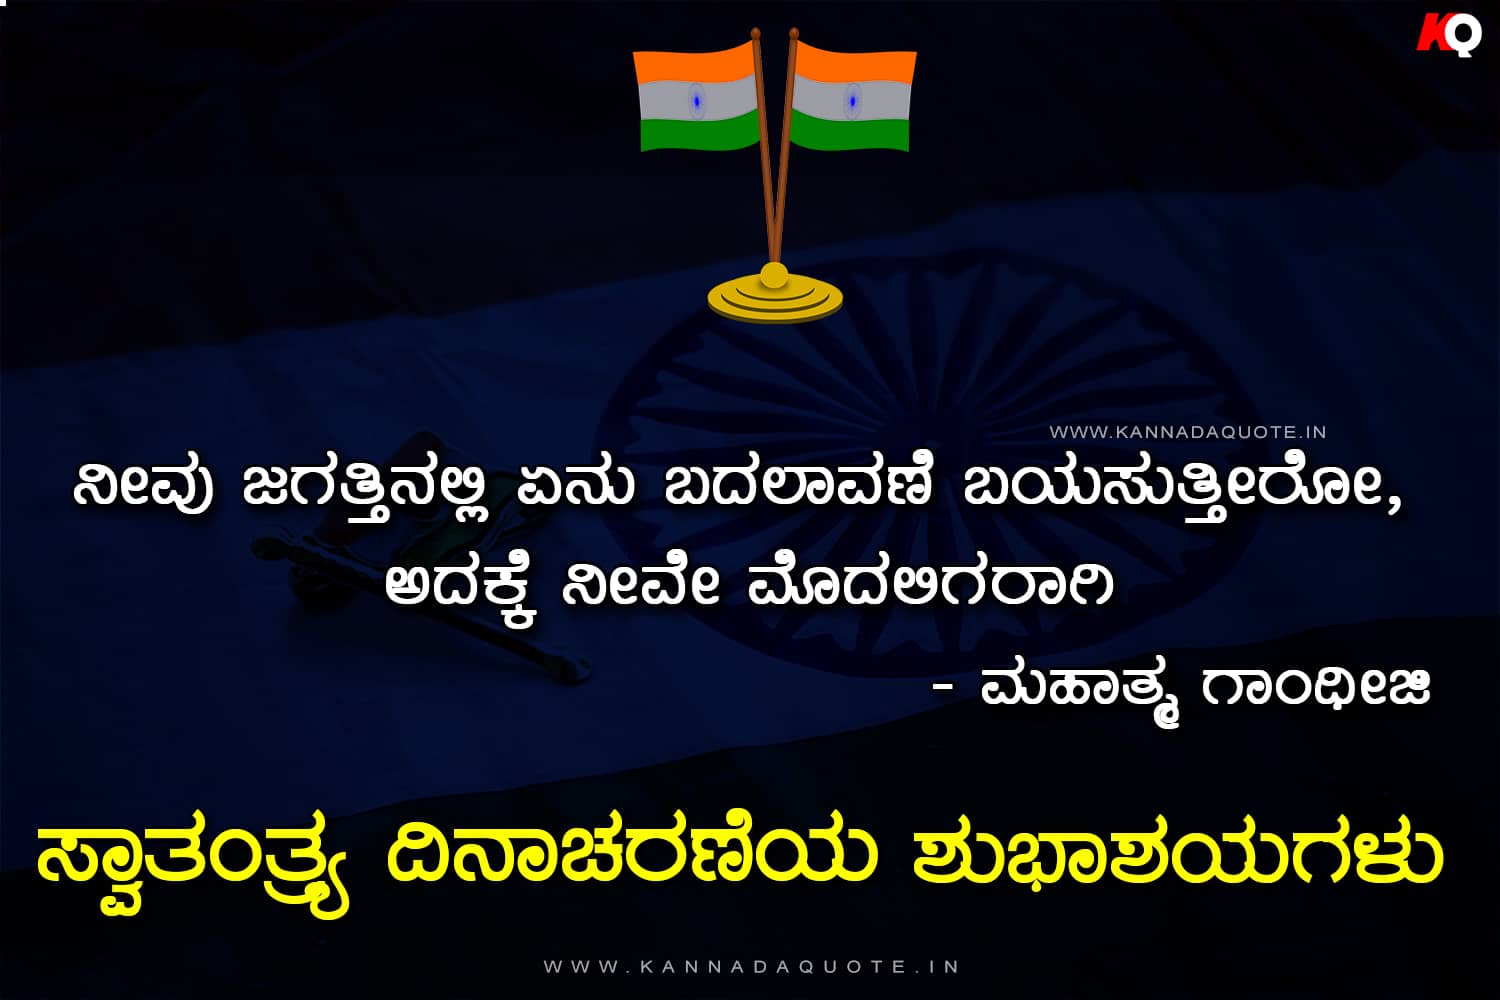 Gandhiji words on Independence day kannada